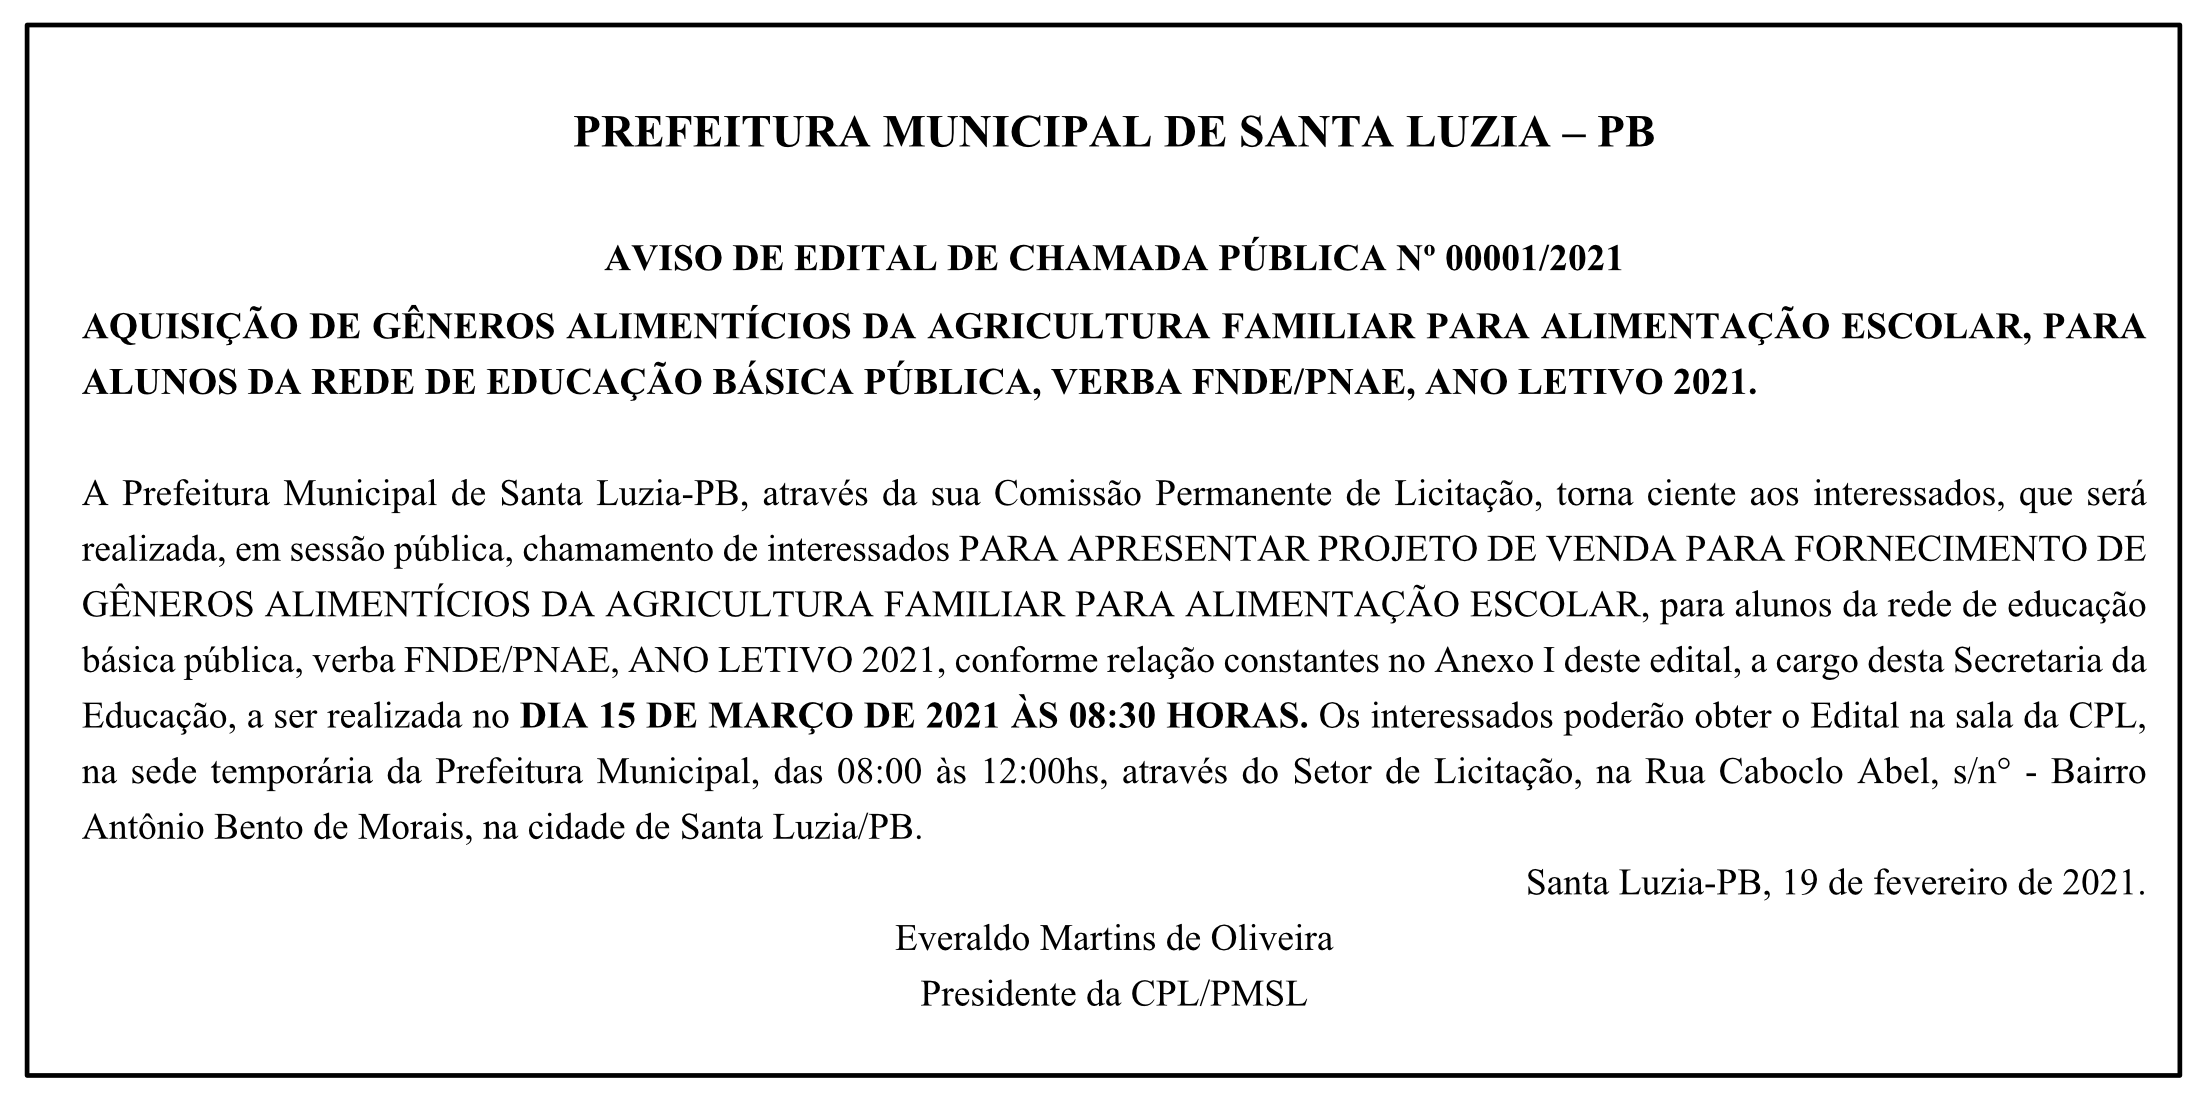 PREFEITURA MUNICIPAL DE SANTA LUZIA – AVISO DE EDITAL DE CHAMADA PÚBLICA Nº 00001/2021